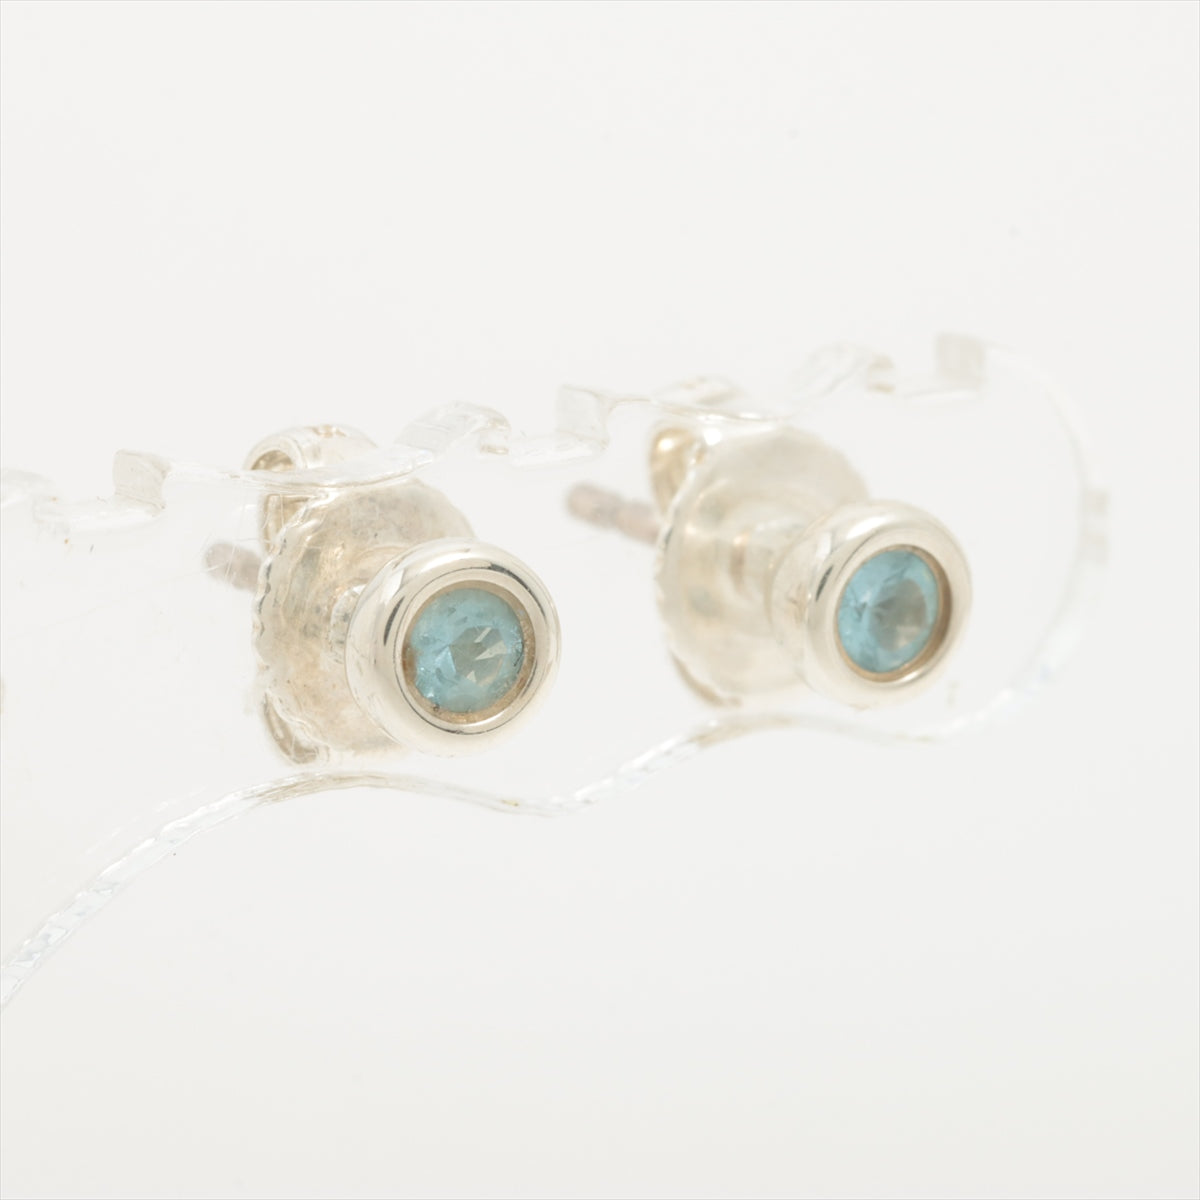 Tiffany Kolor By the Yard Piercing jewelry (for both ears) 925 1.0g Silver Aquamarine